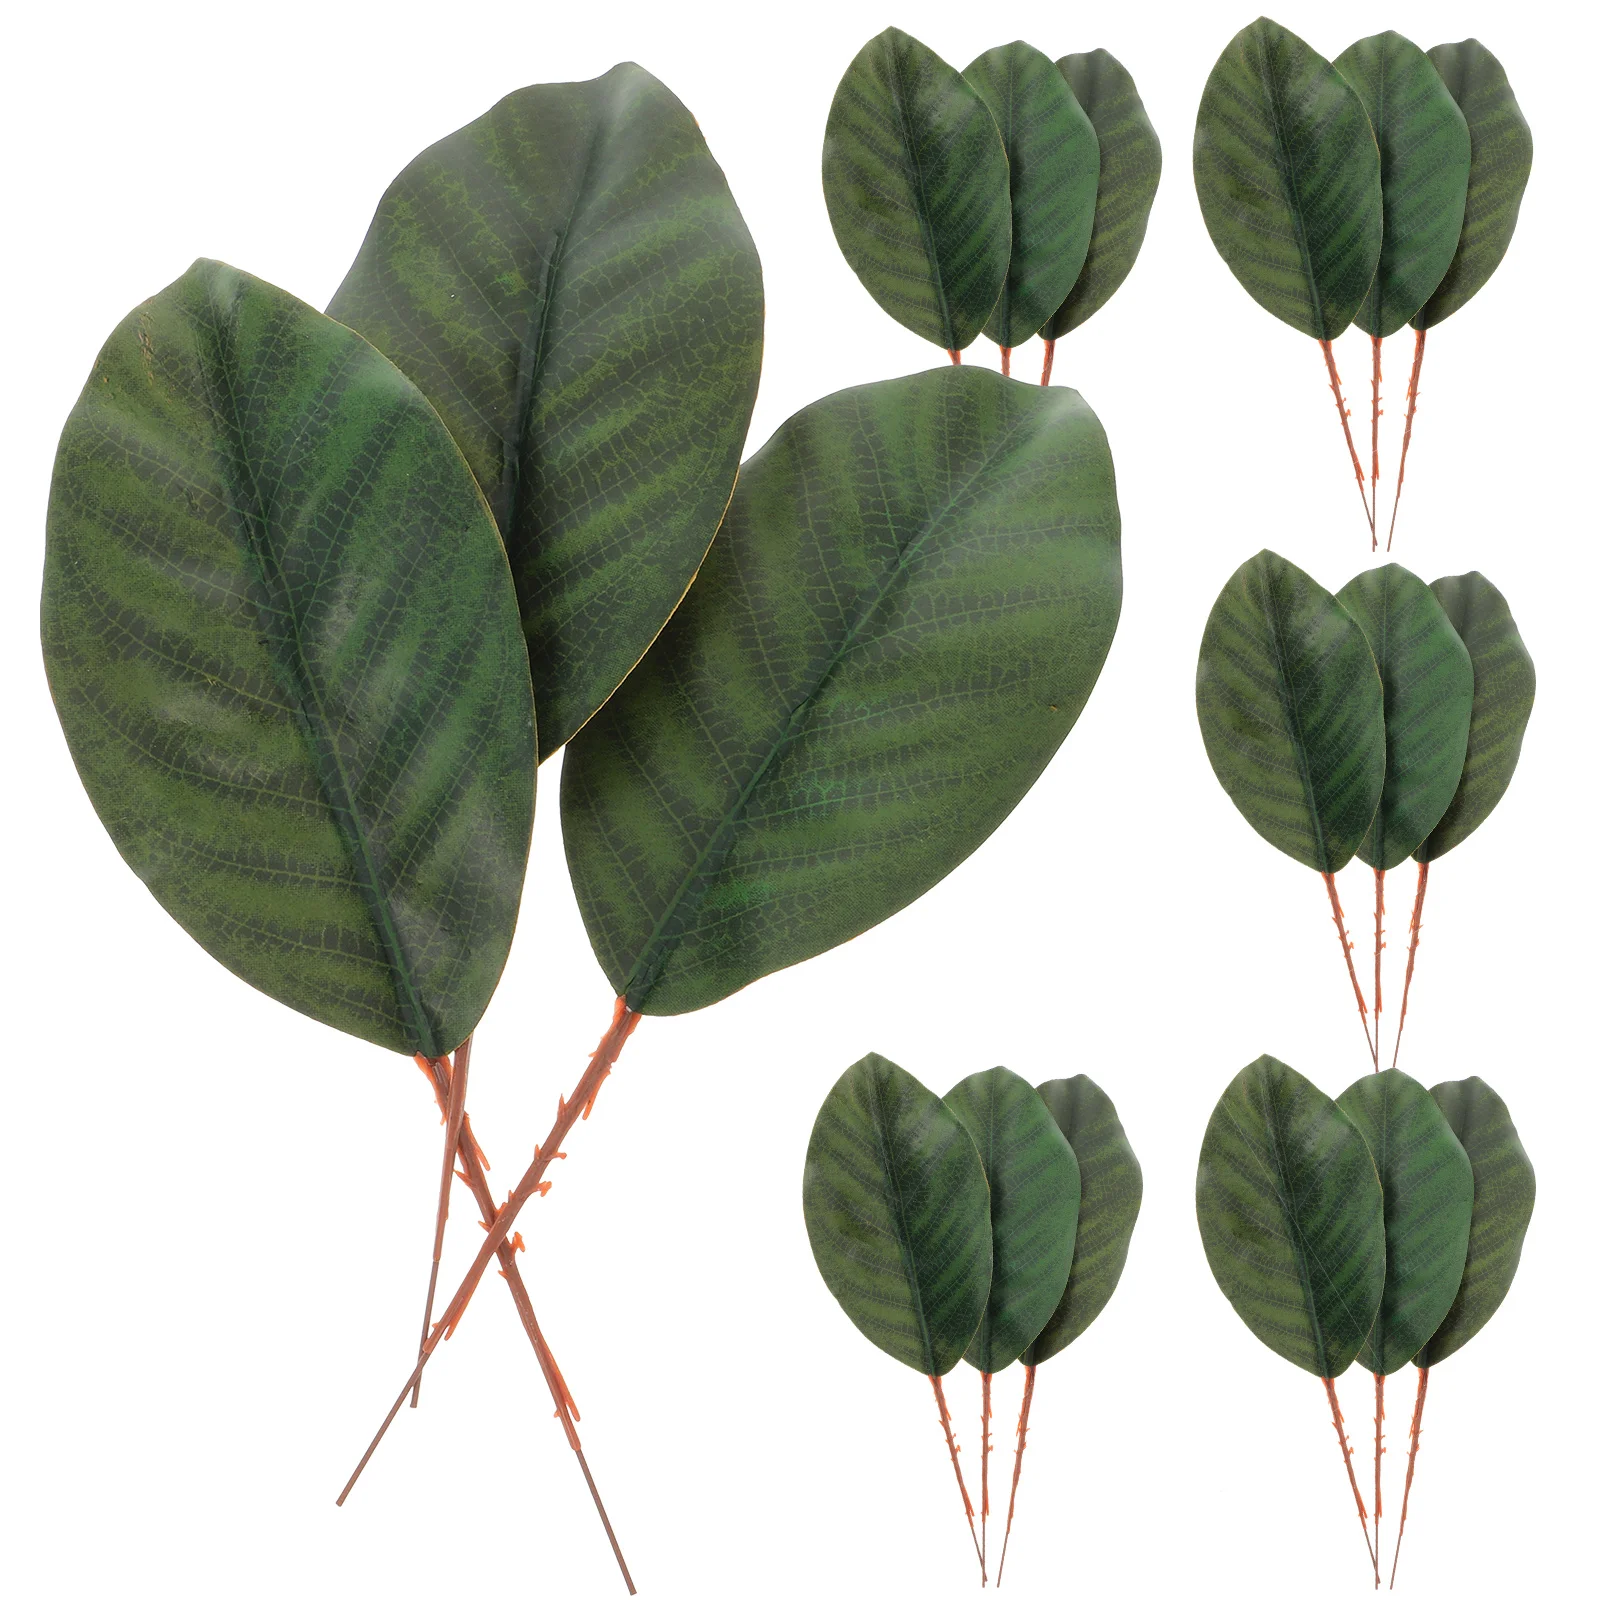 

30 Pcs Artificial Magnolia Leaves Silk Green Plant Fake Decor Wedding Garland Ornaments Decorative Realistic Faux DIY Wreath